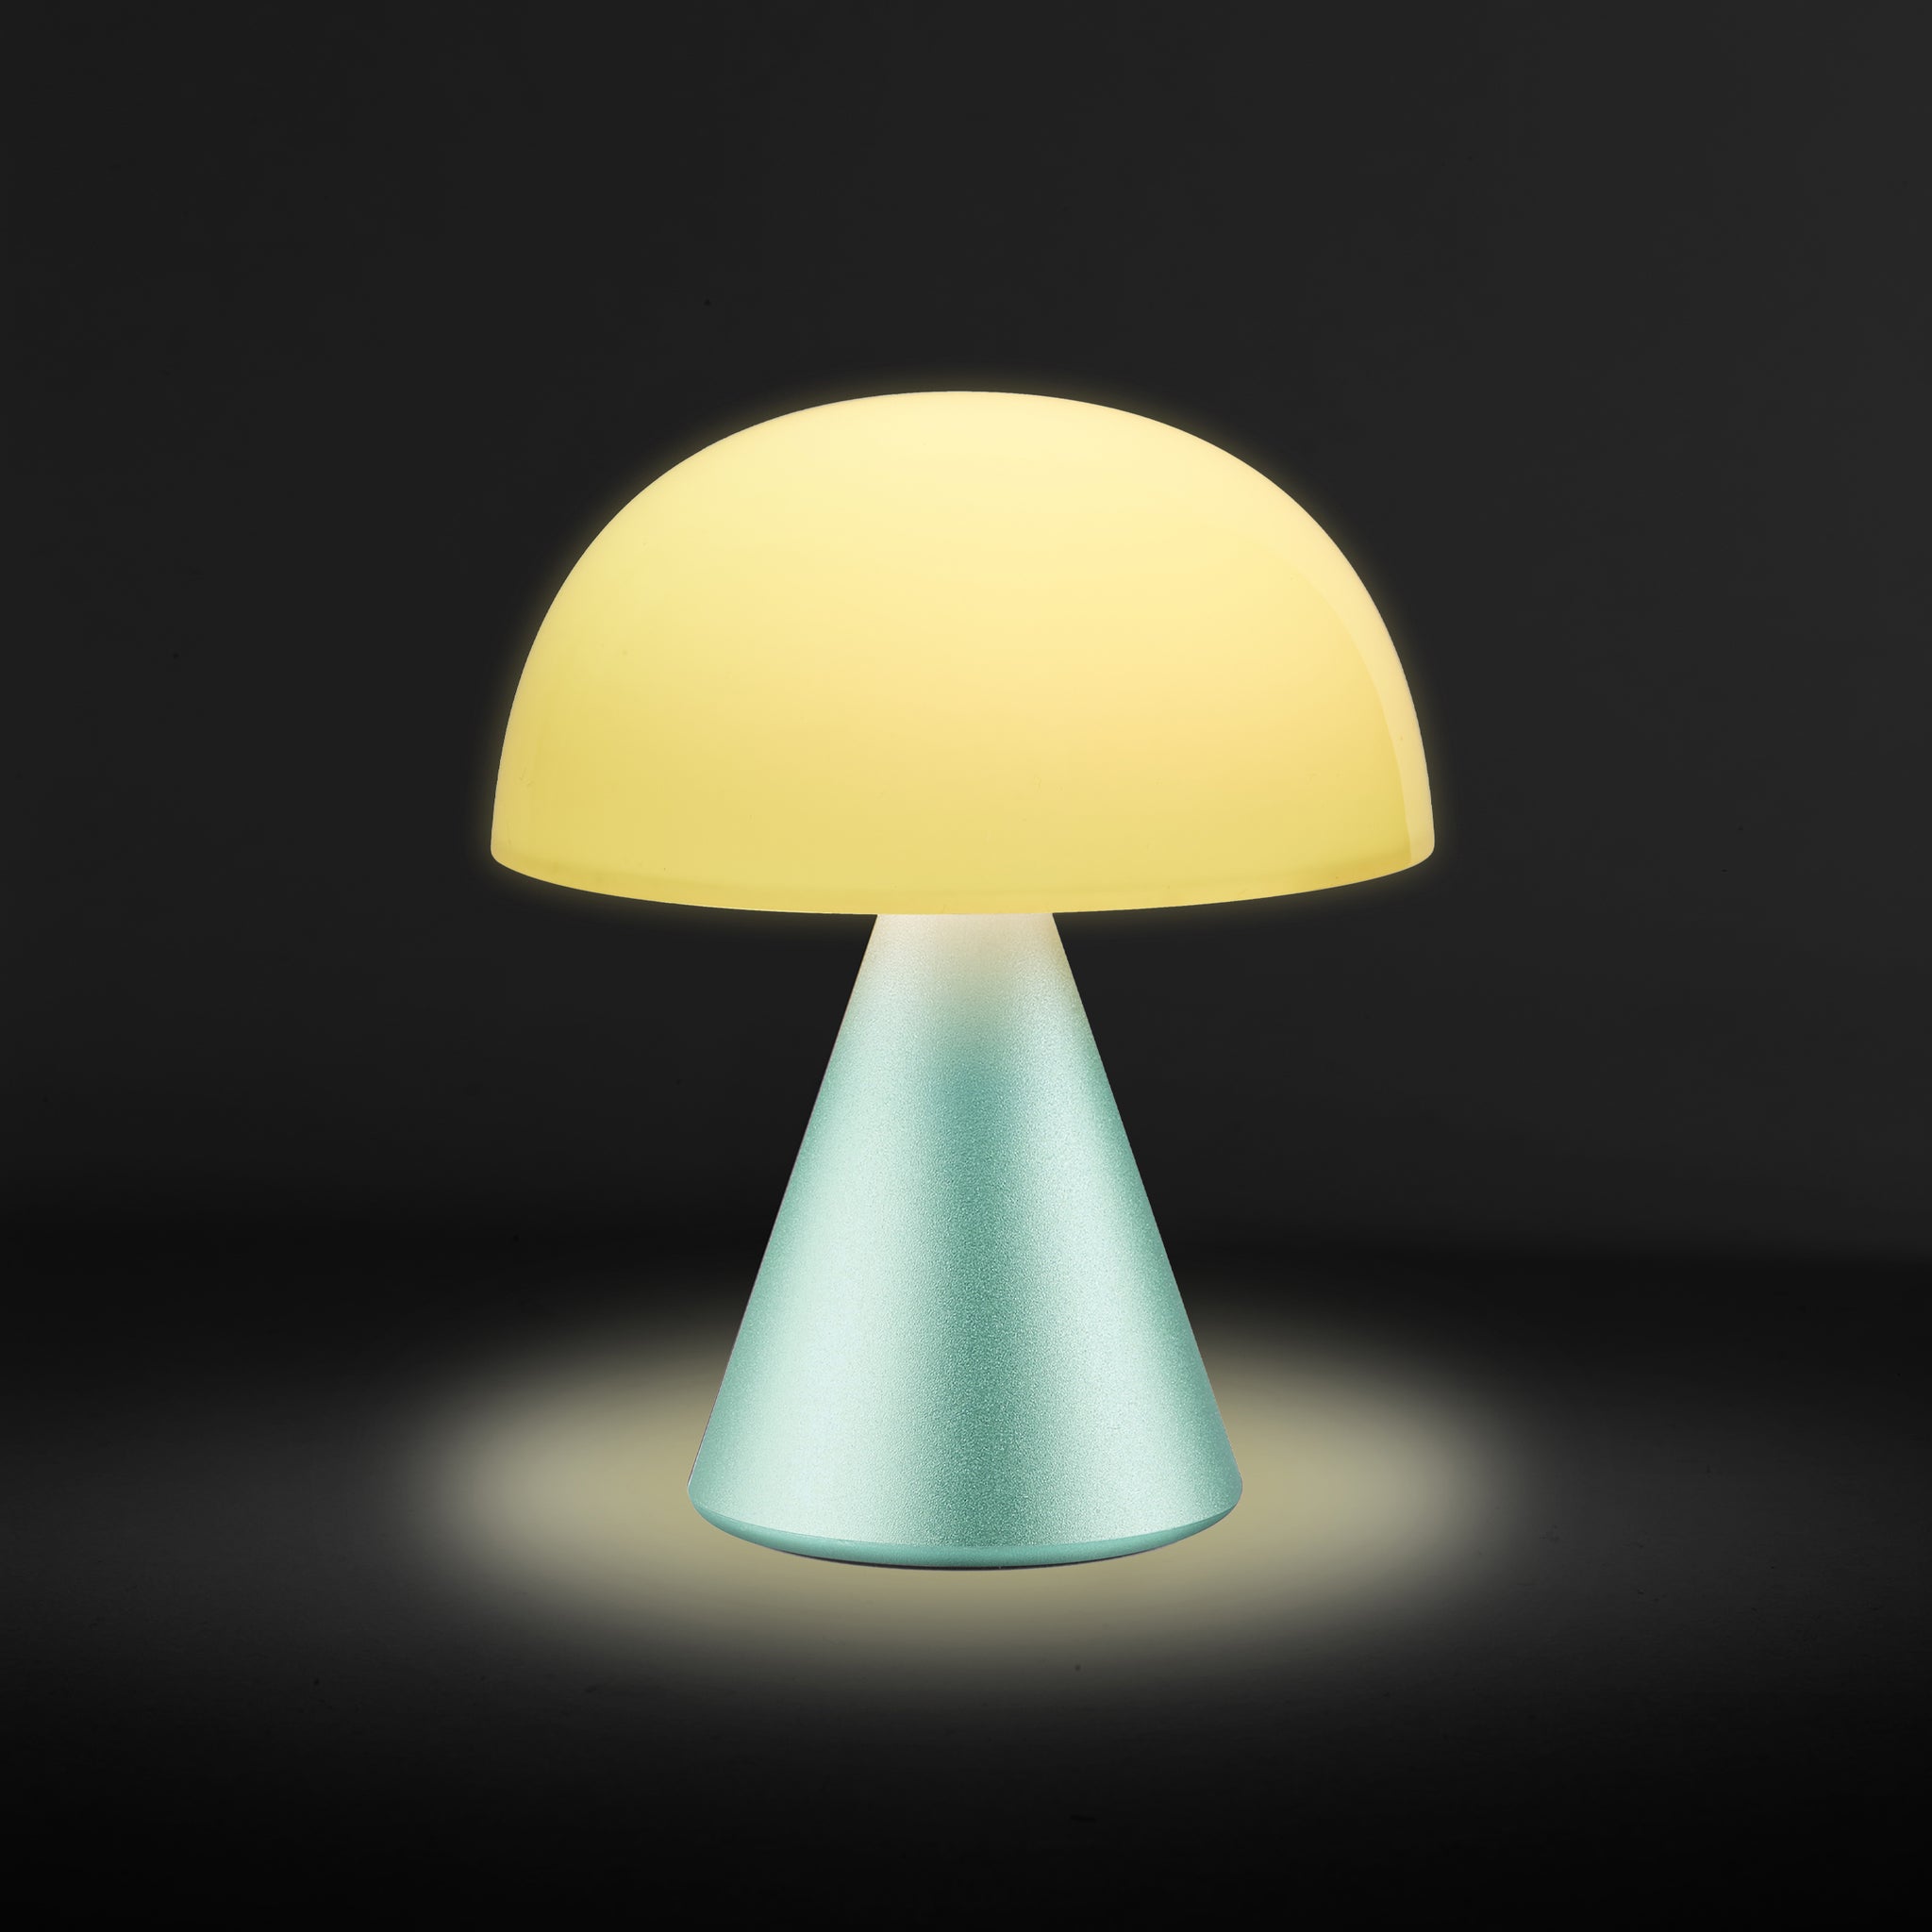 Lexon Mina Medium Mint Groen│LH64M1│Oplaadbare LED-Lamp│geel licht aan tegen donkere achtergrond